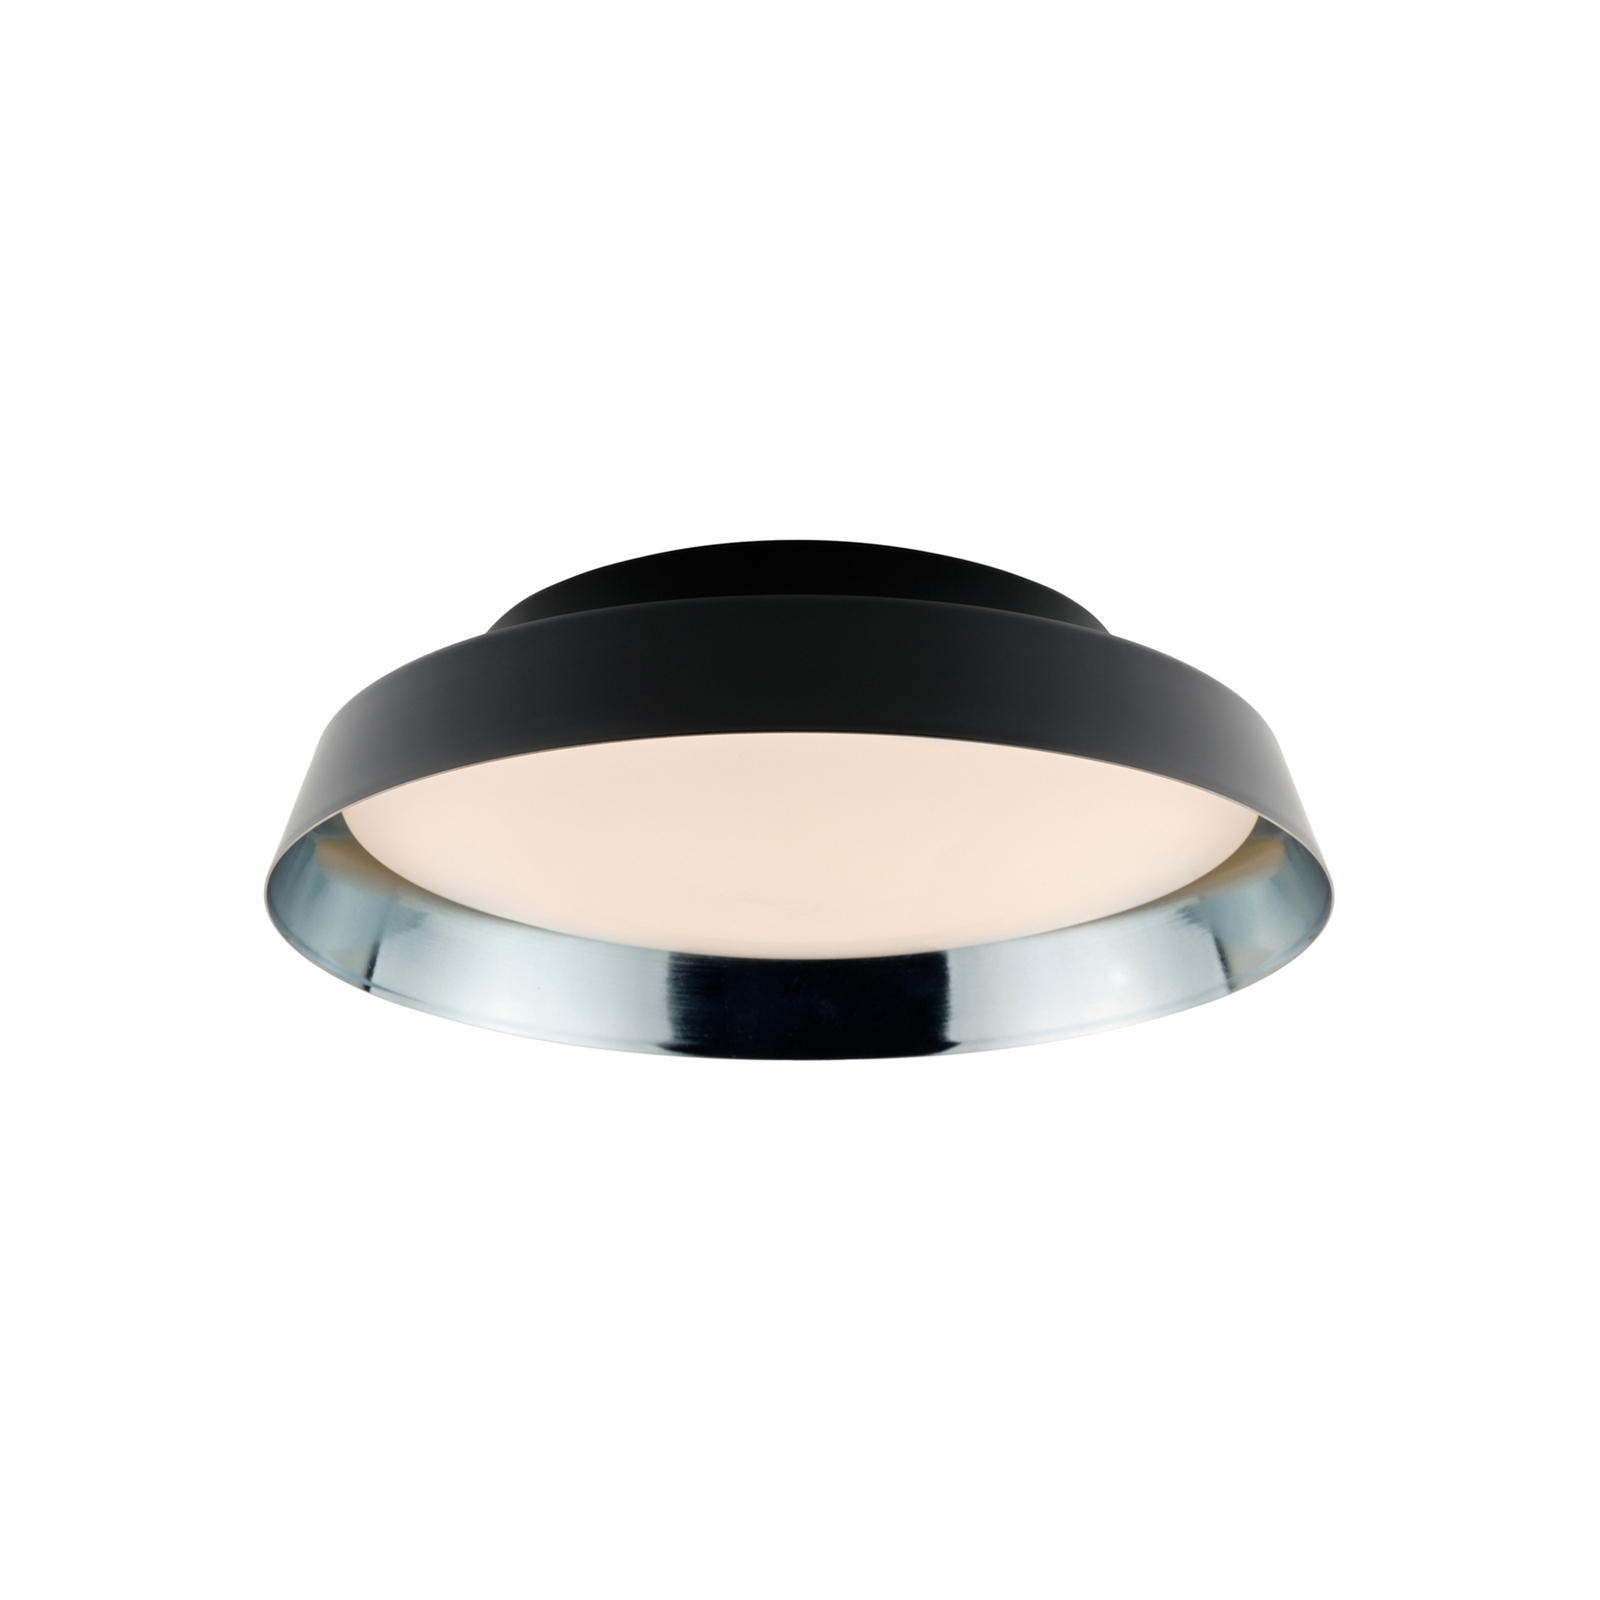 Lampa sufitowa LED Boop! Ø37cm czarna/szara